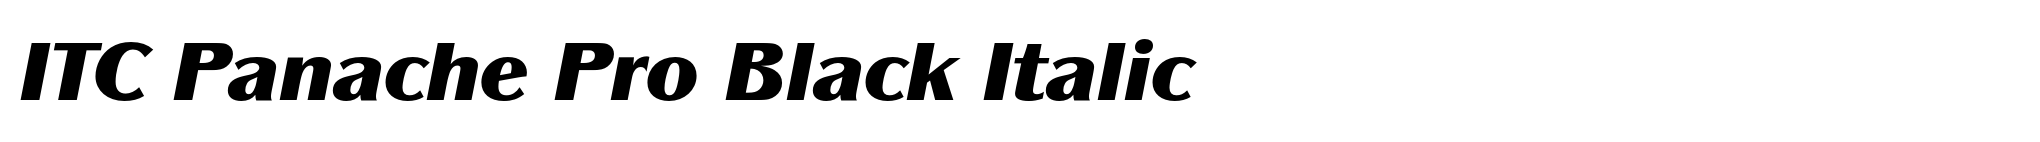 ITC Panache Pro Black Italic image